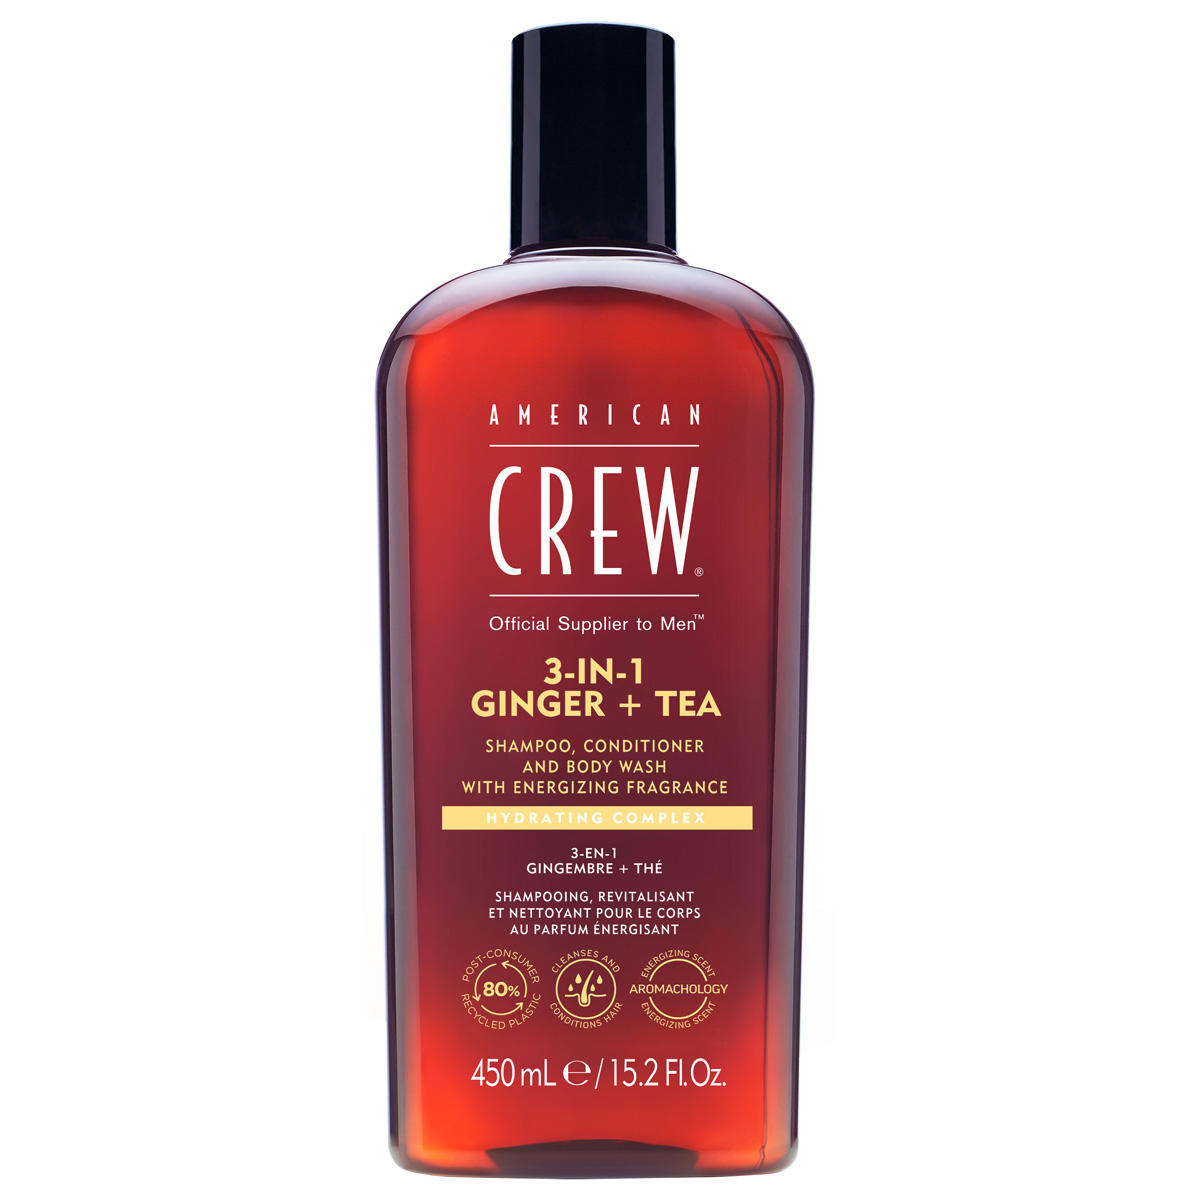 American Crew 3In1 Ginger & Tea Shampoo, Conditioner & Body Wash 450 ml - 1